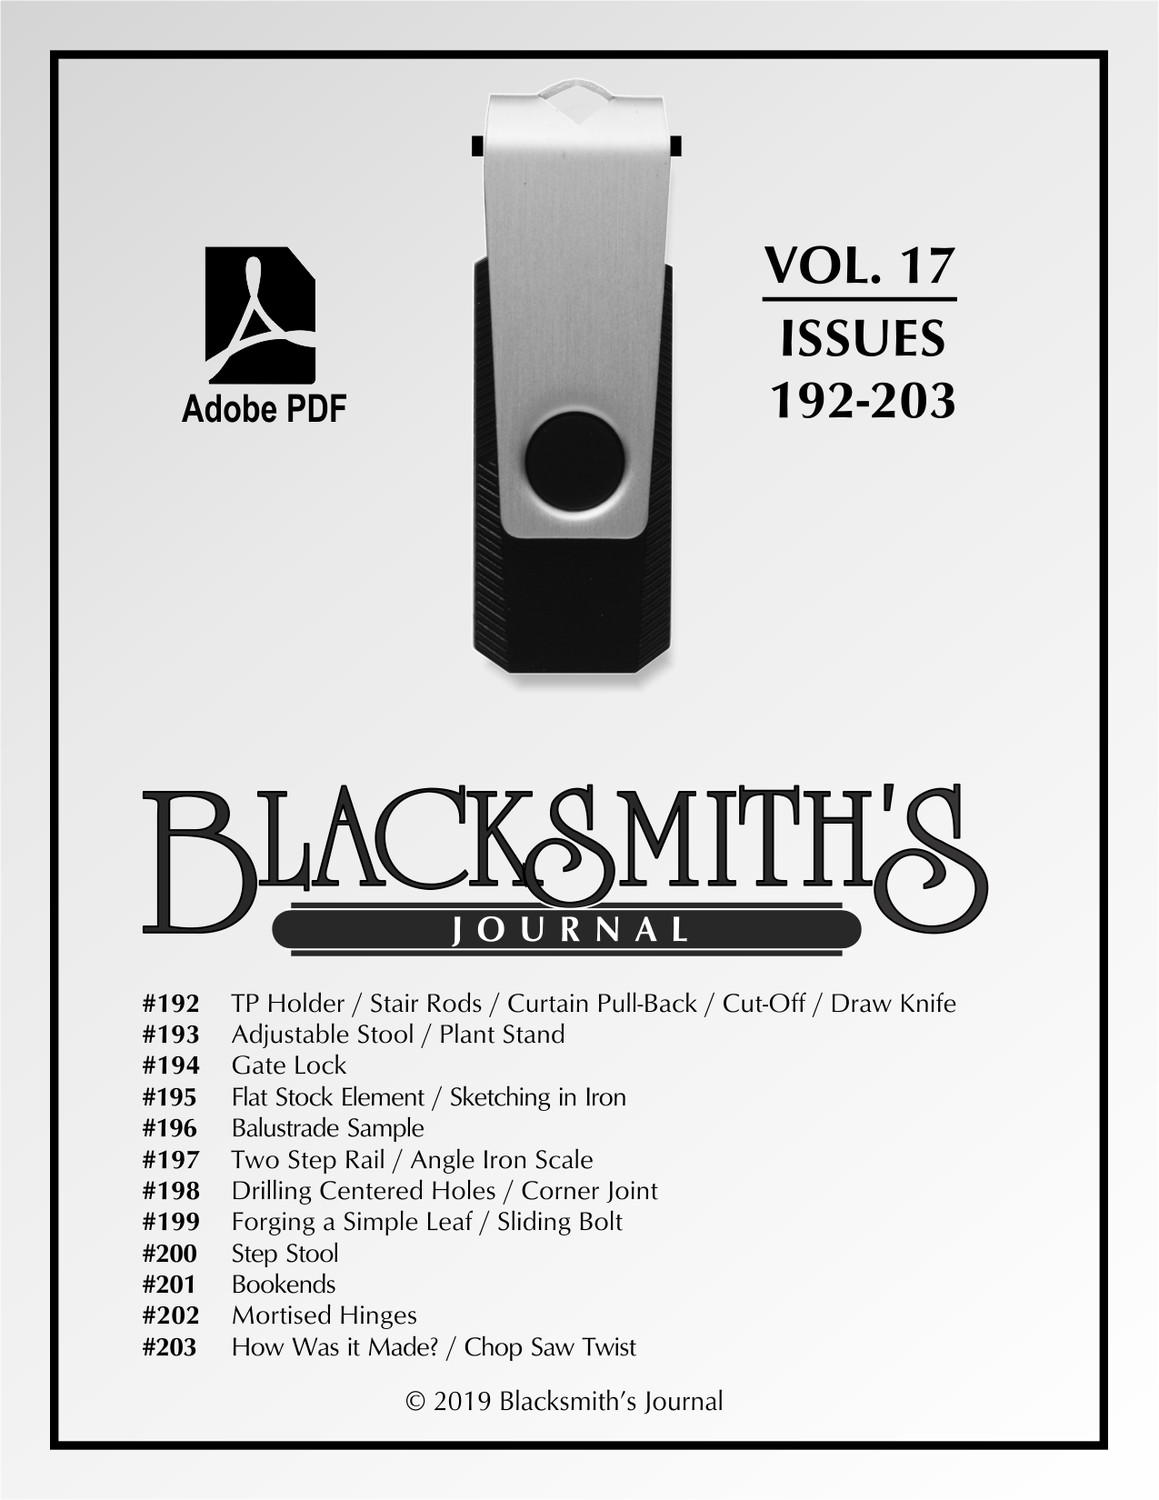 USB Flash Drive - Blacksmith's Journal Vol. 17